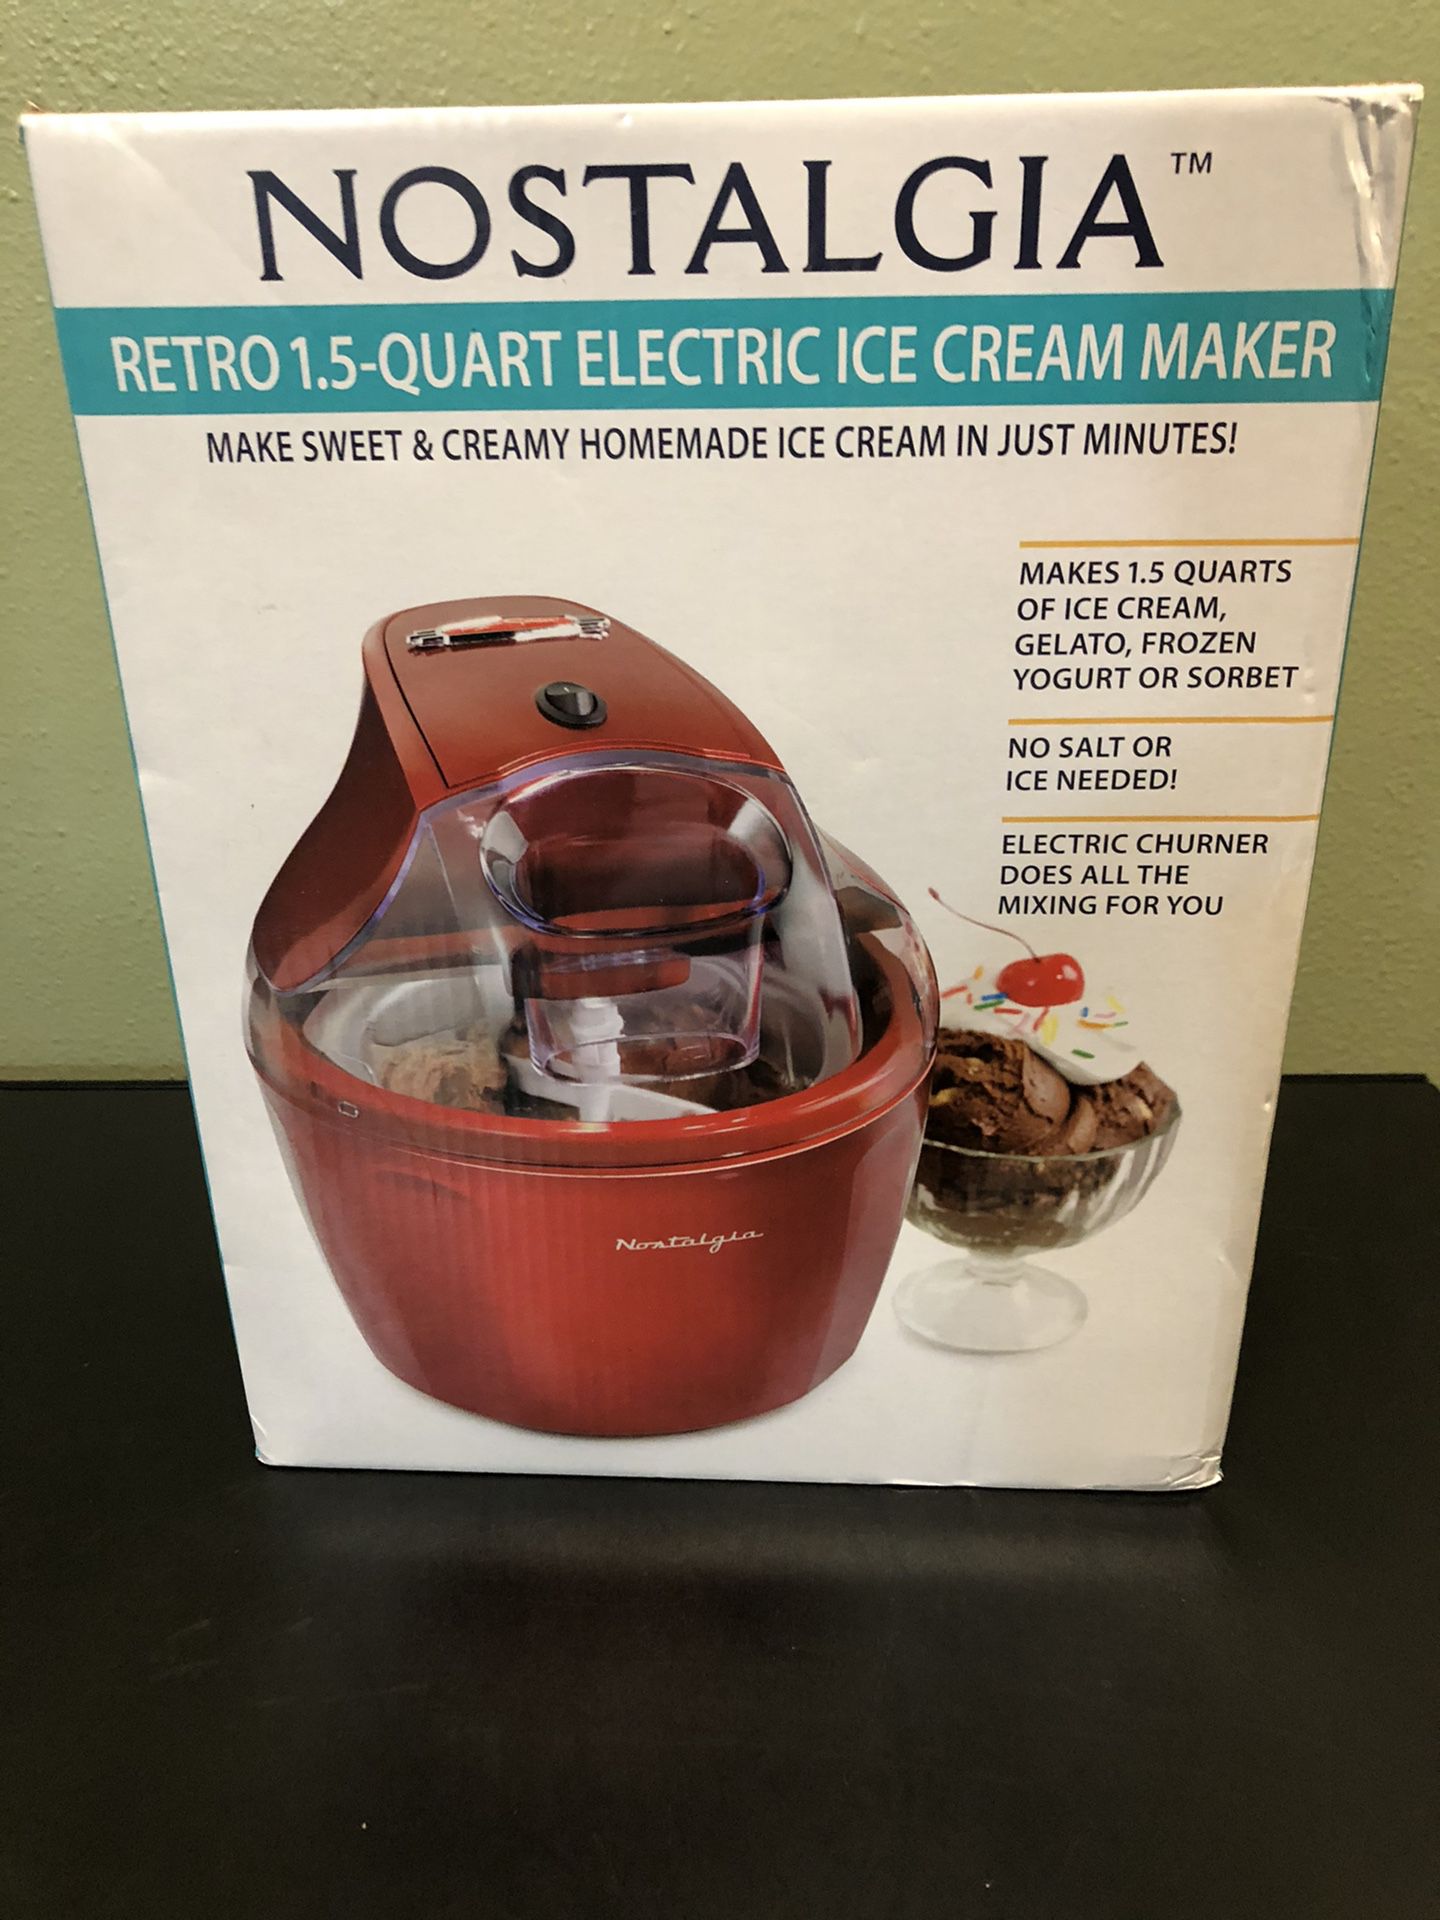 Brand new Nostalgia Retro 1.5 quart electric ice cream maker